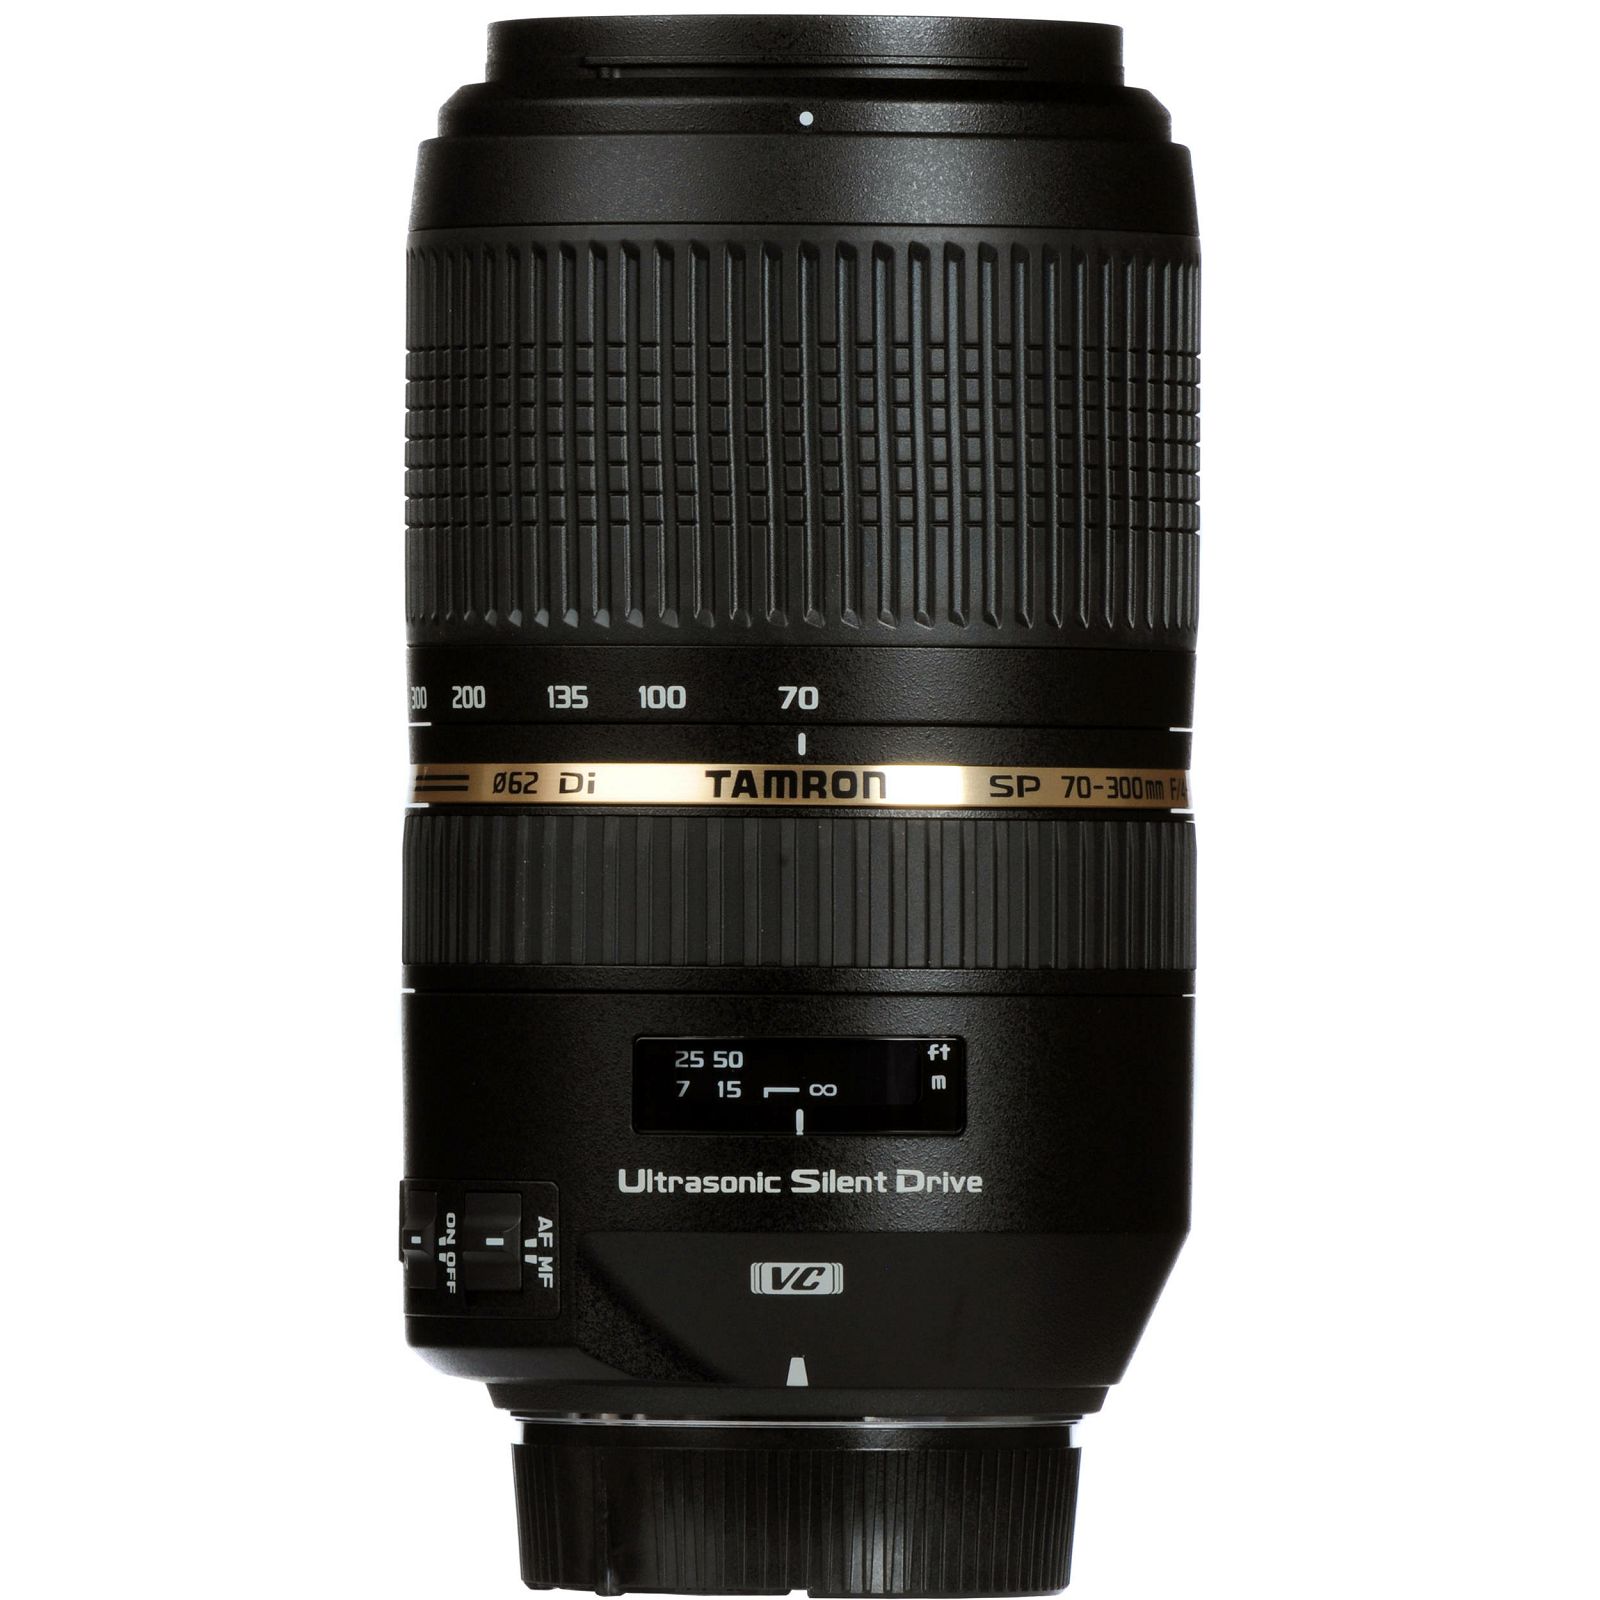 Tamron AF SP 70-300 f/4-5.6 Di VC USD telefoto objektiv za Nikon FX with built-in motor (A005N)